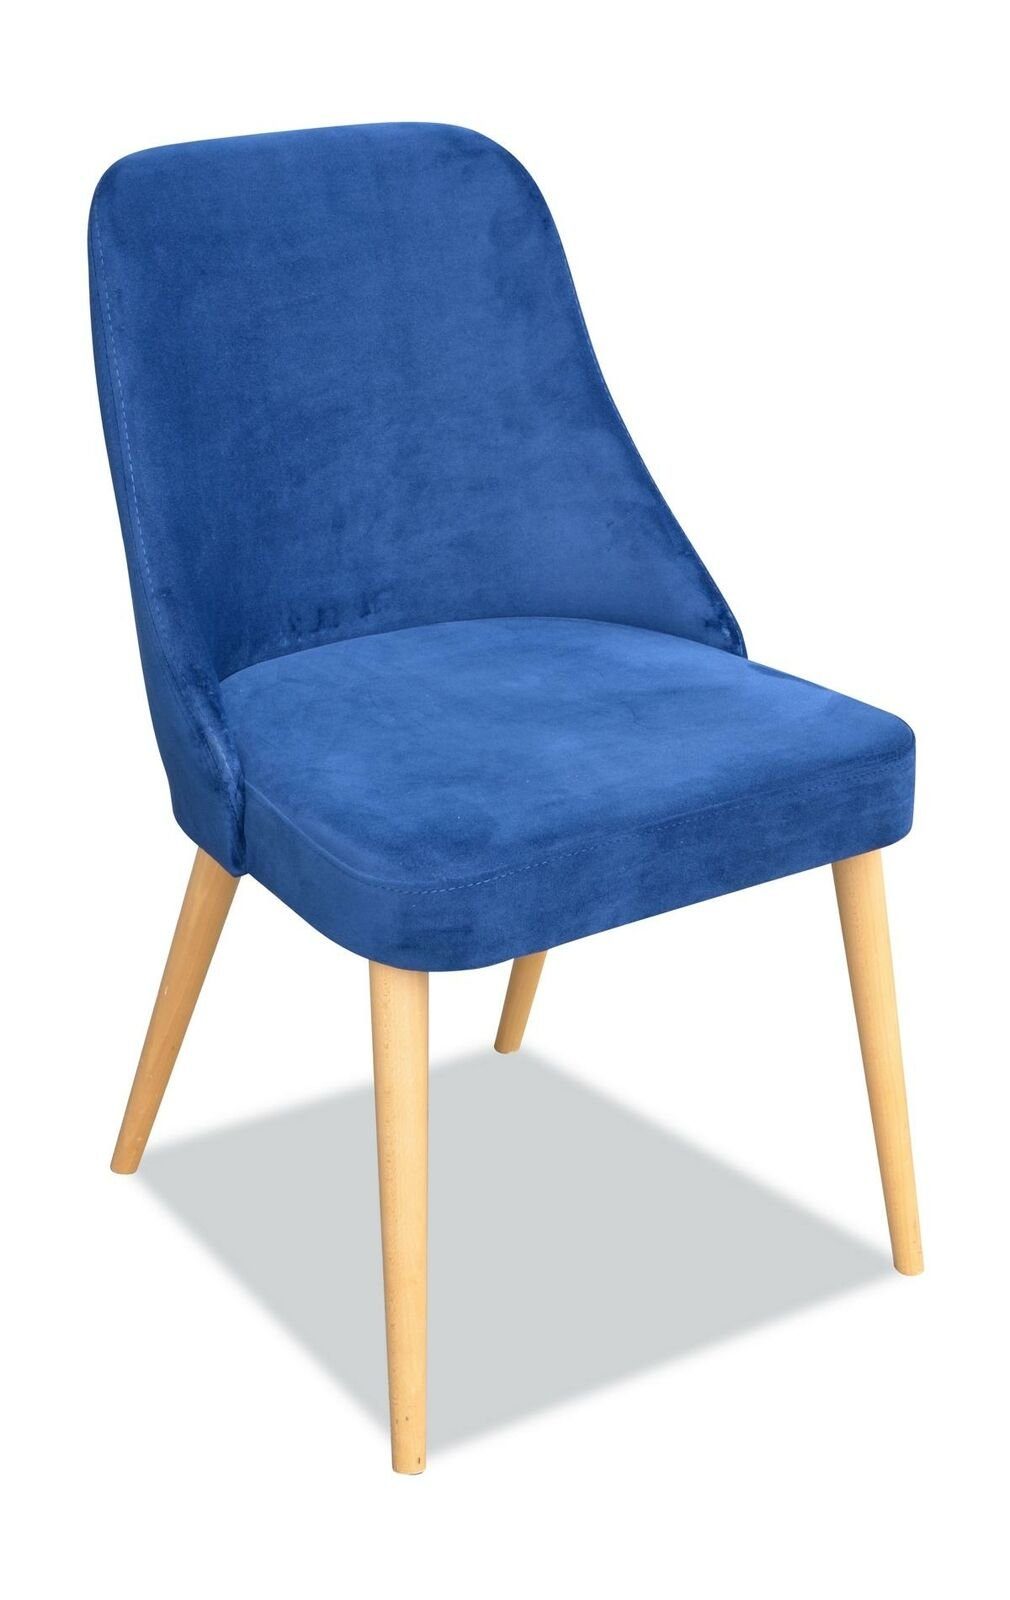 Stuhl, Stühle Holz Möbel 6x Stuhl Gruppe Küche Textil Stoff Garnitur JVmoebel Stühle Esszimmer